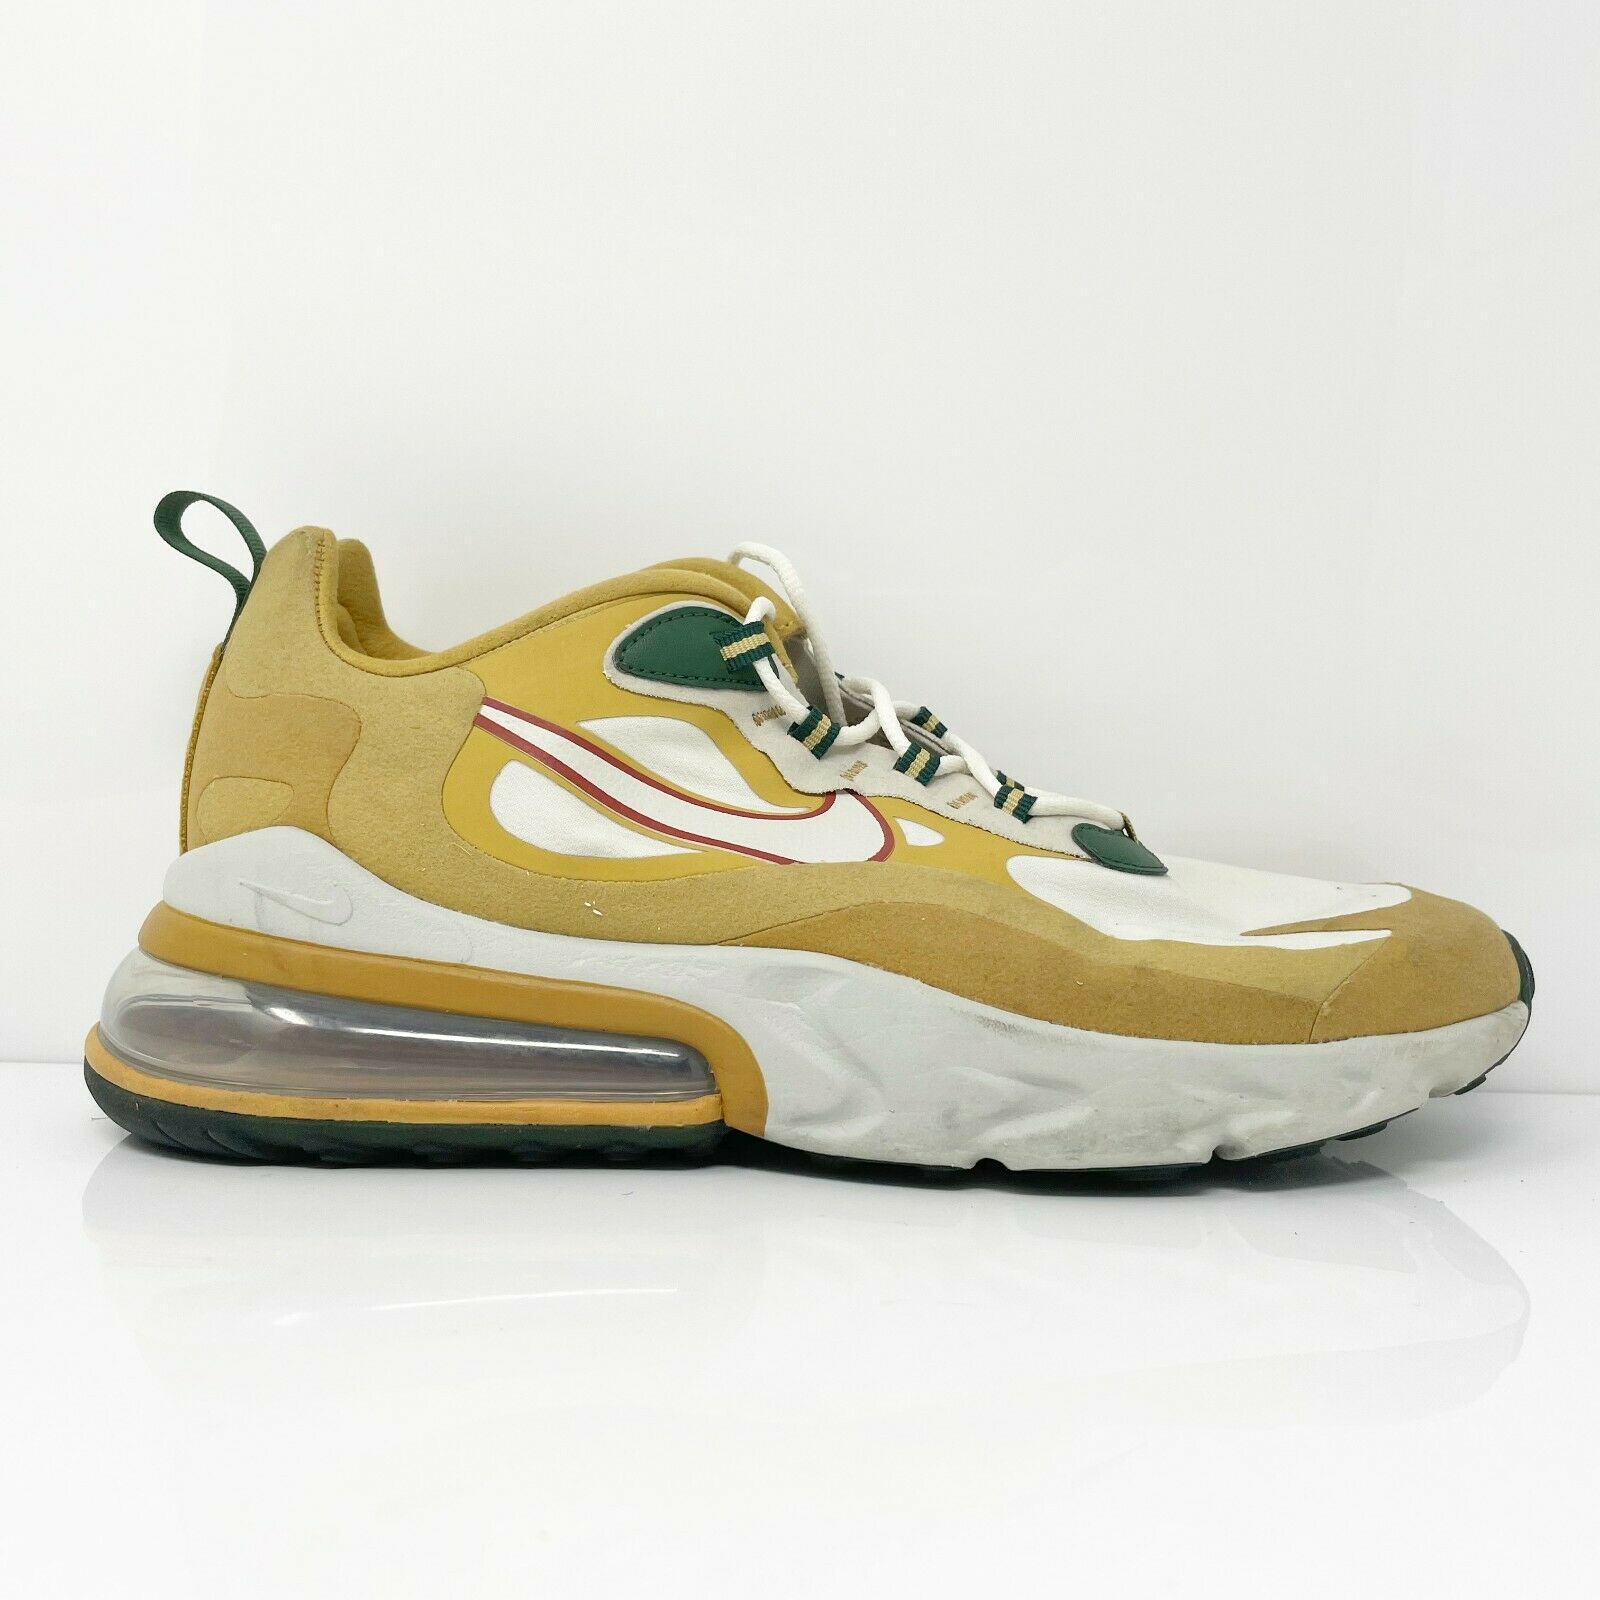 Nike Mens Air Max 270 React AO4971-700 Yellow Running Shoes Sneakers Sz 10